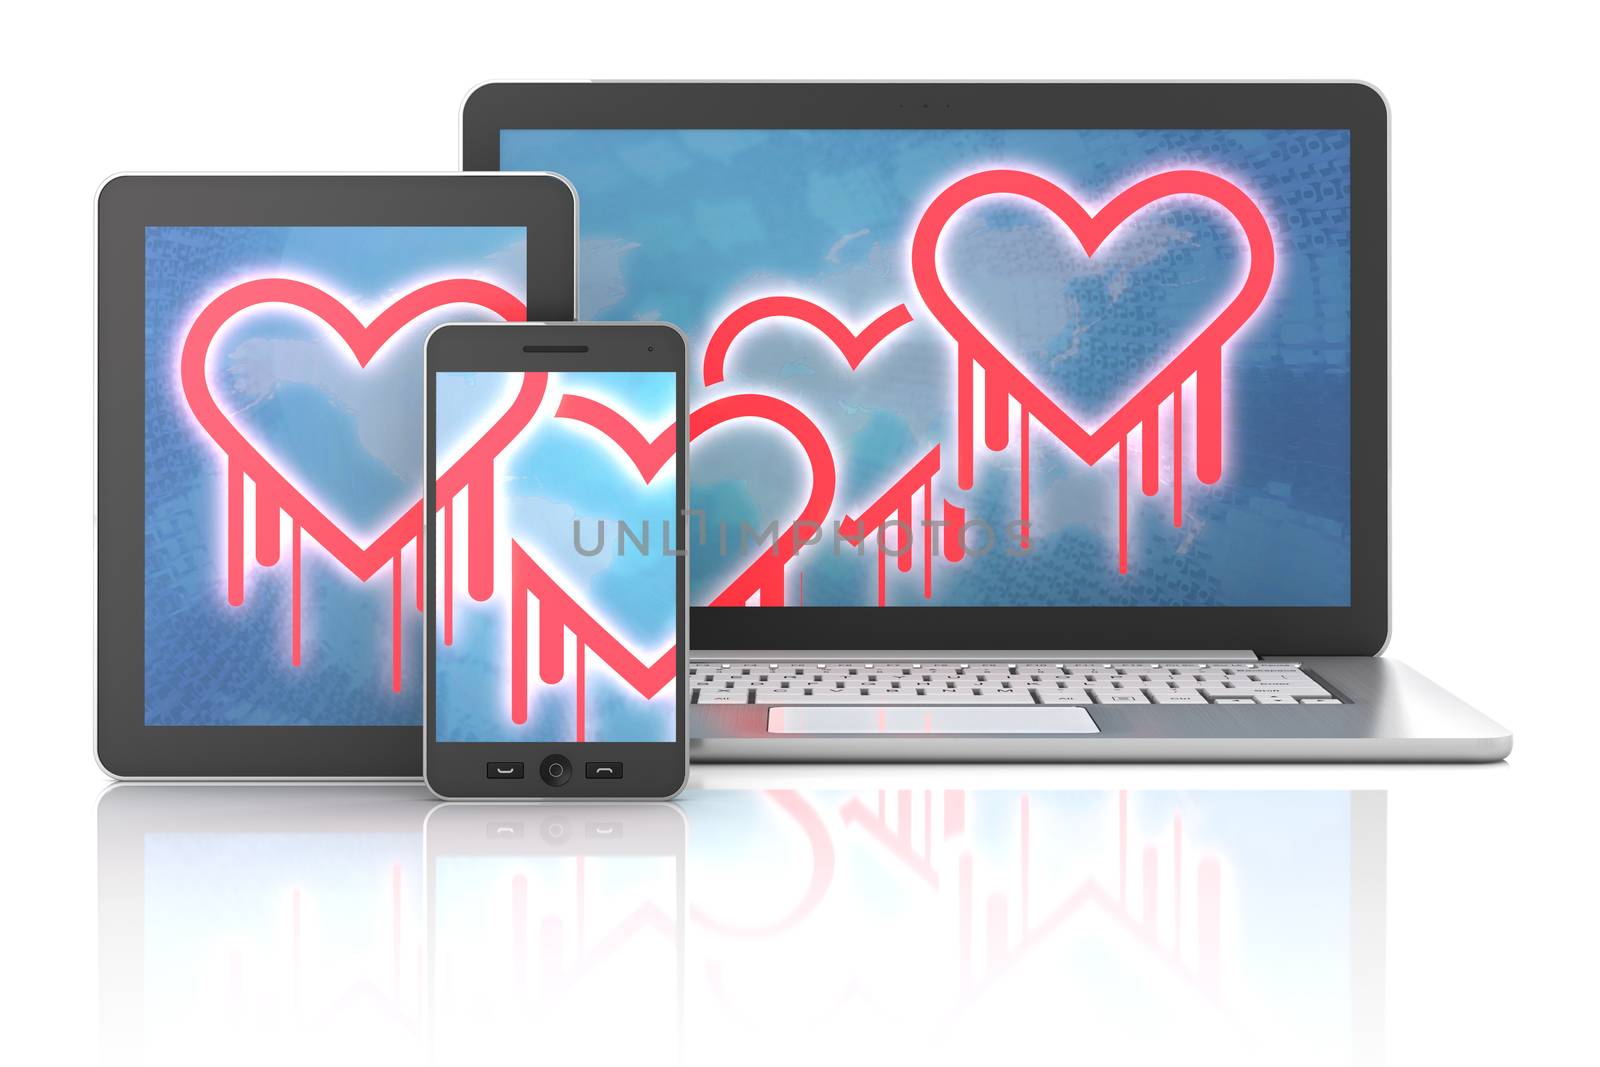 Heartbleed bug symbols on gadgets, including digital tablet, smartphone and computer, 3d render, white background